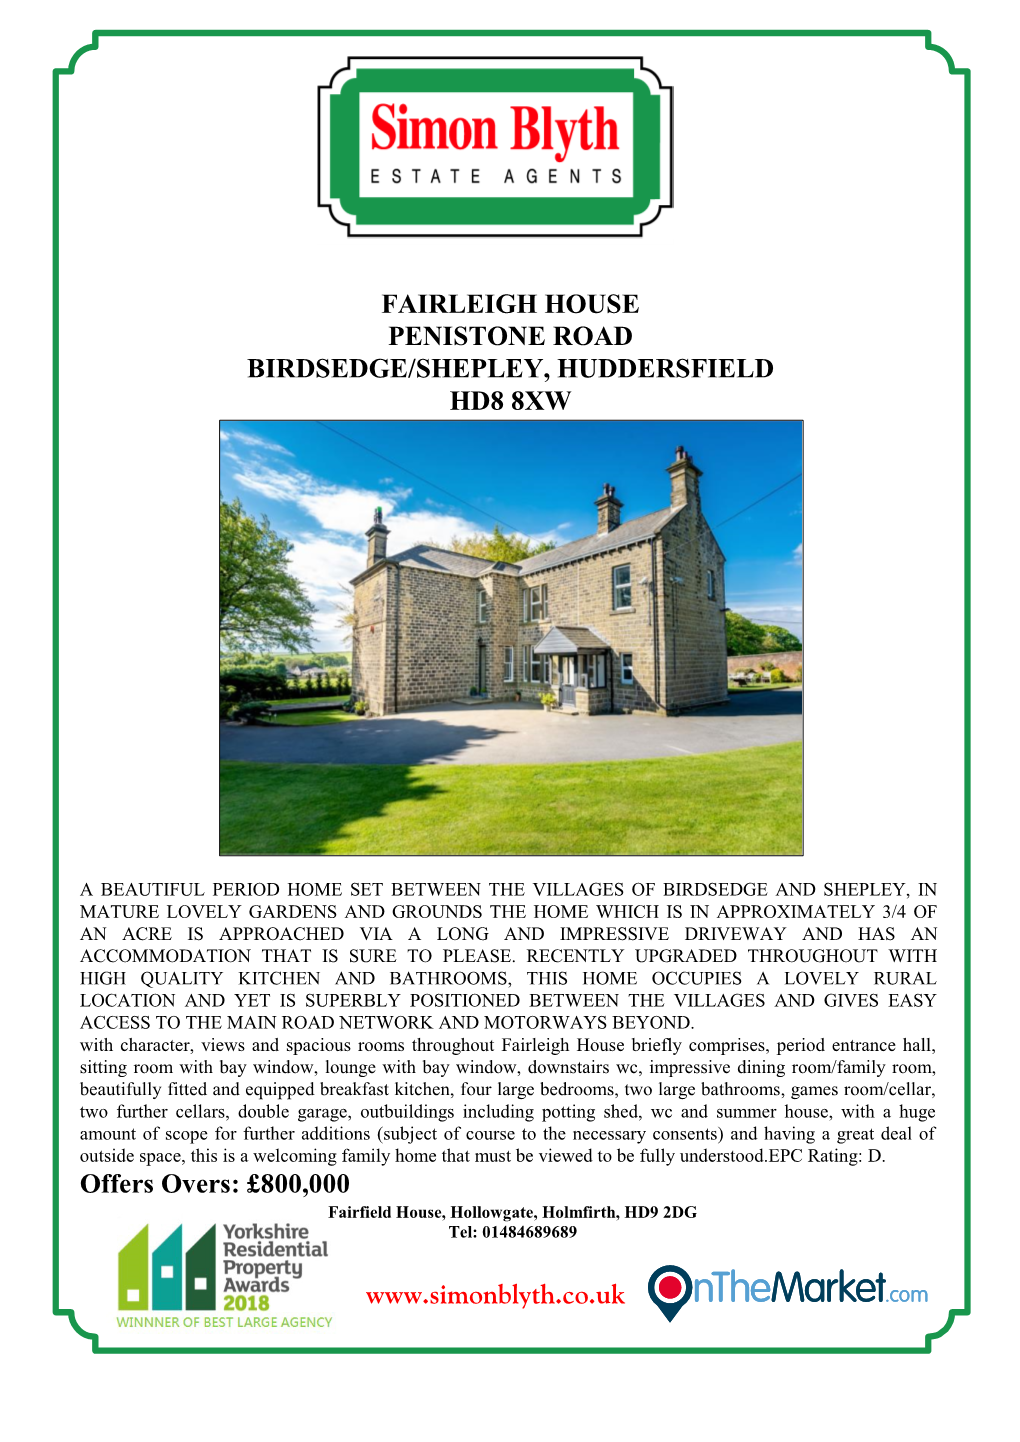 Fairleigh House Penistone Road Birdsedge/Shepley, Huddersfield Hd8 8Xw